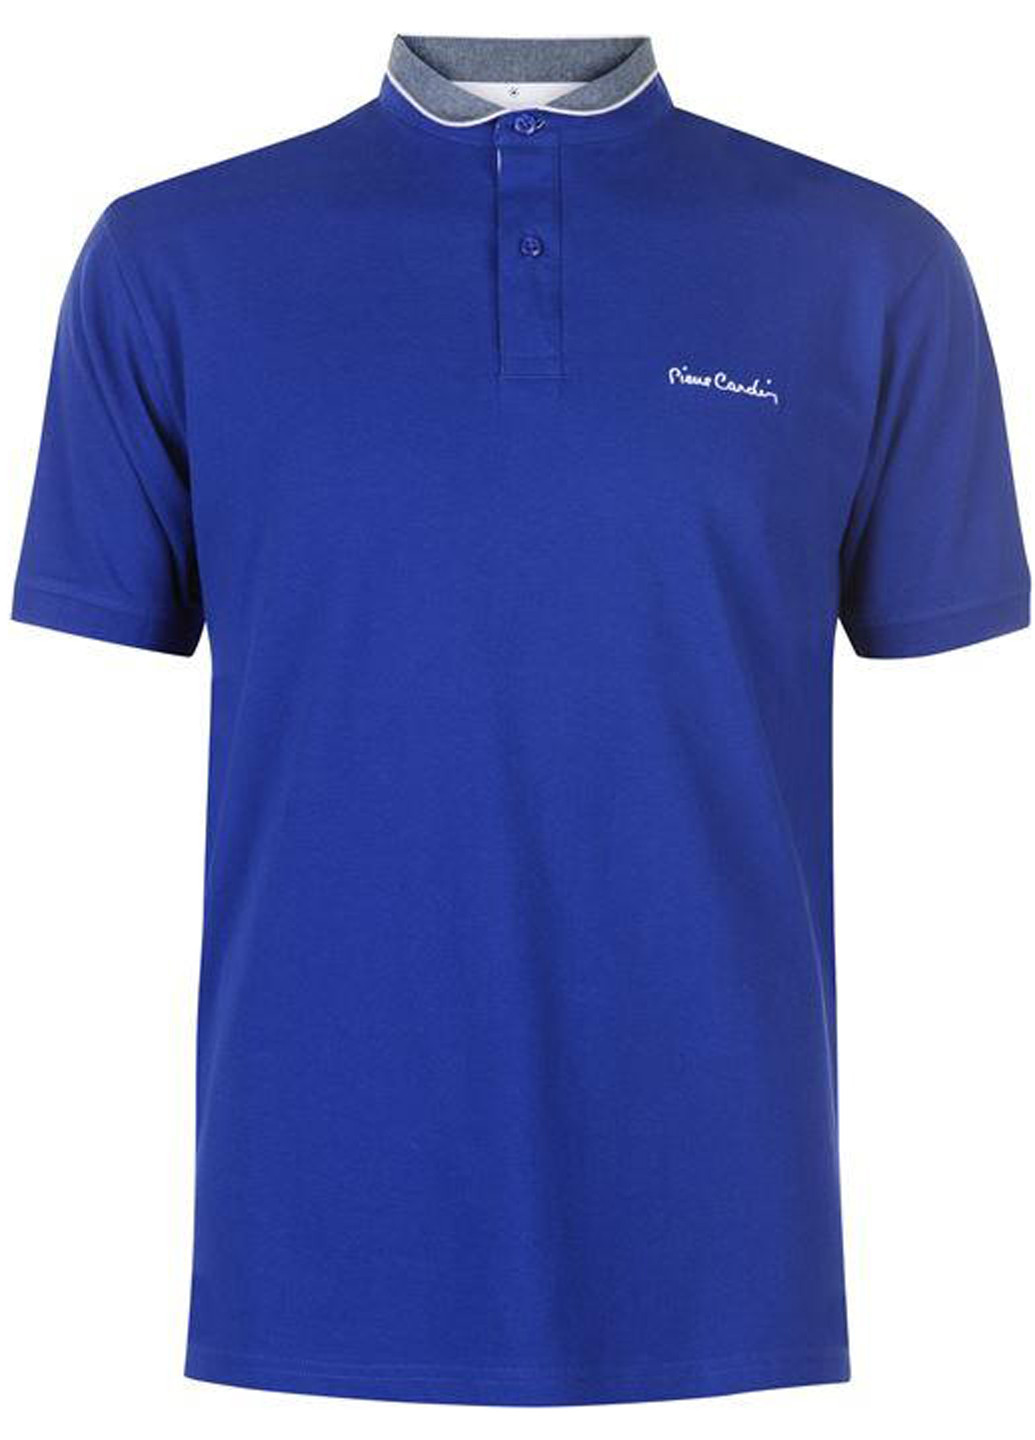 Синяя футболка-поло для мужчин Pierre Cardin с надписью